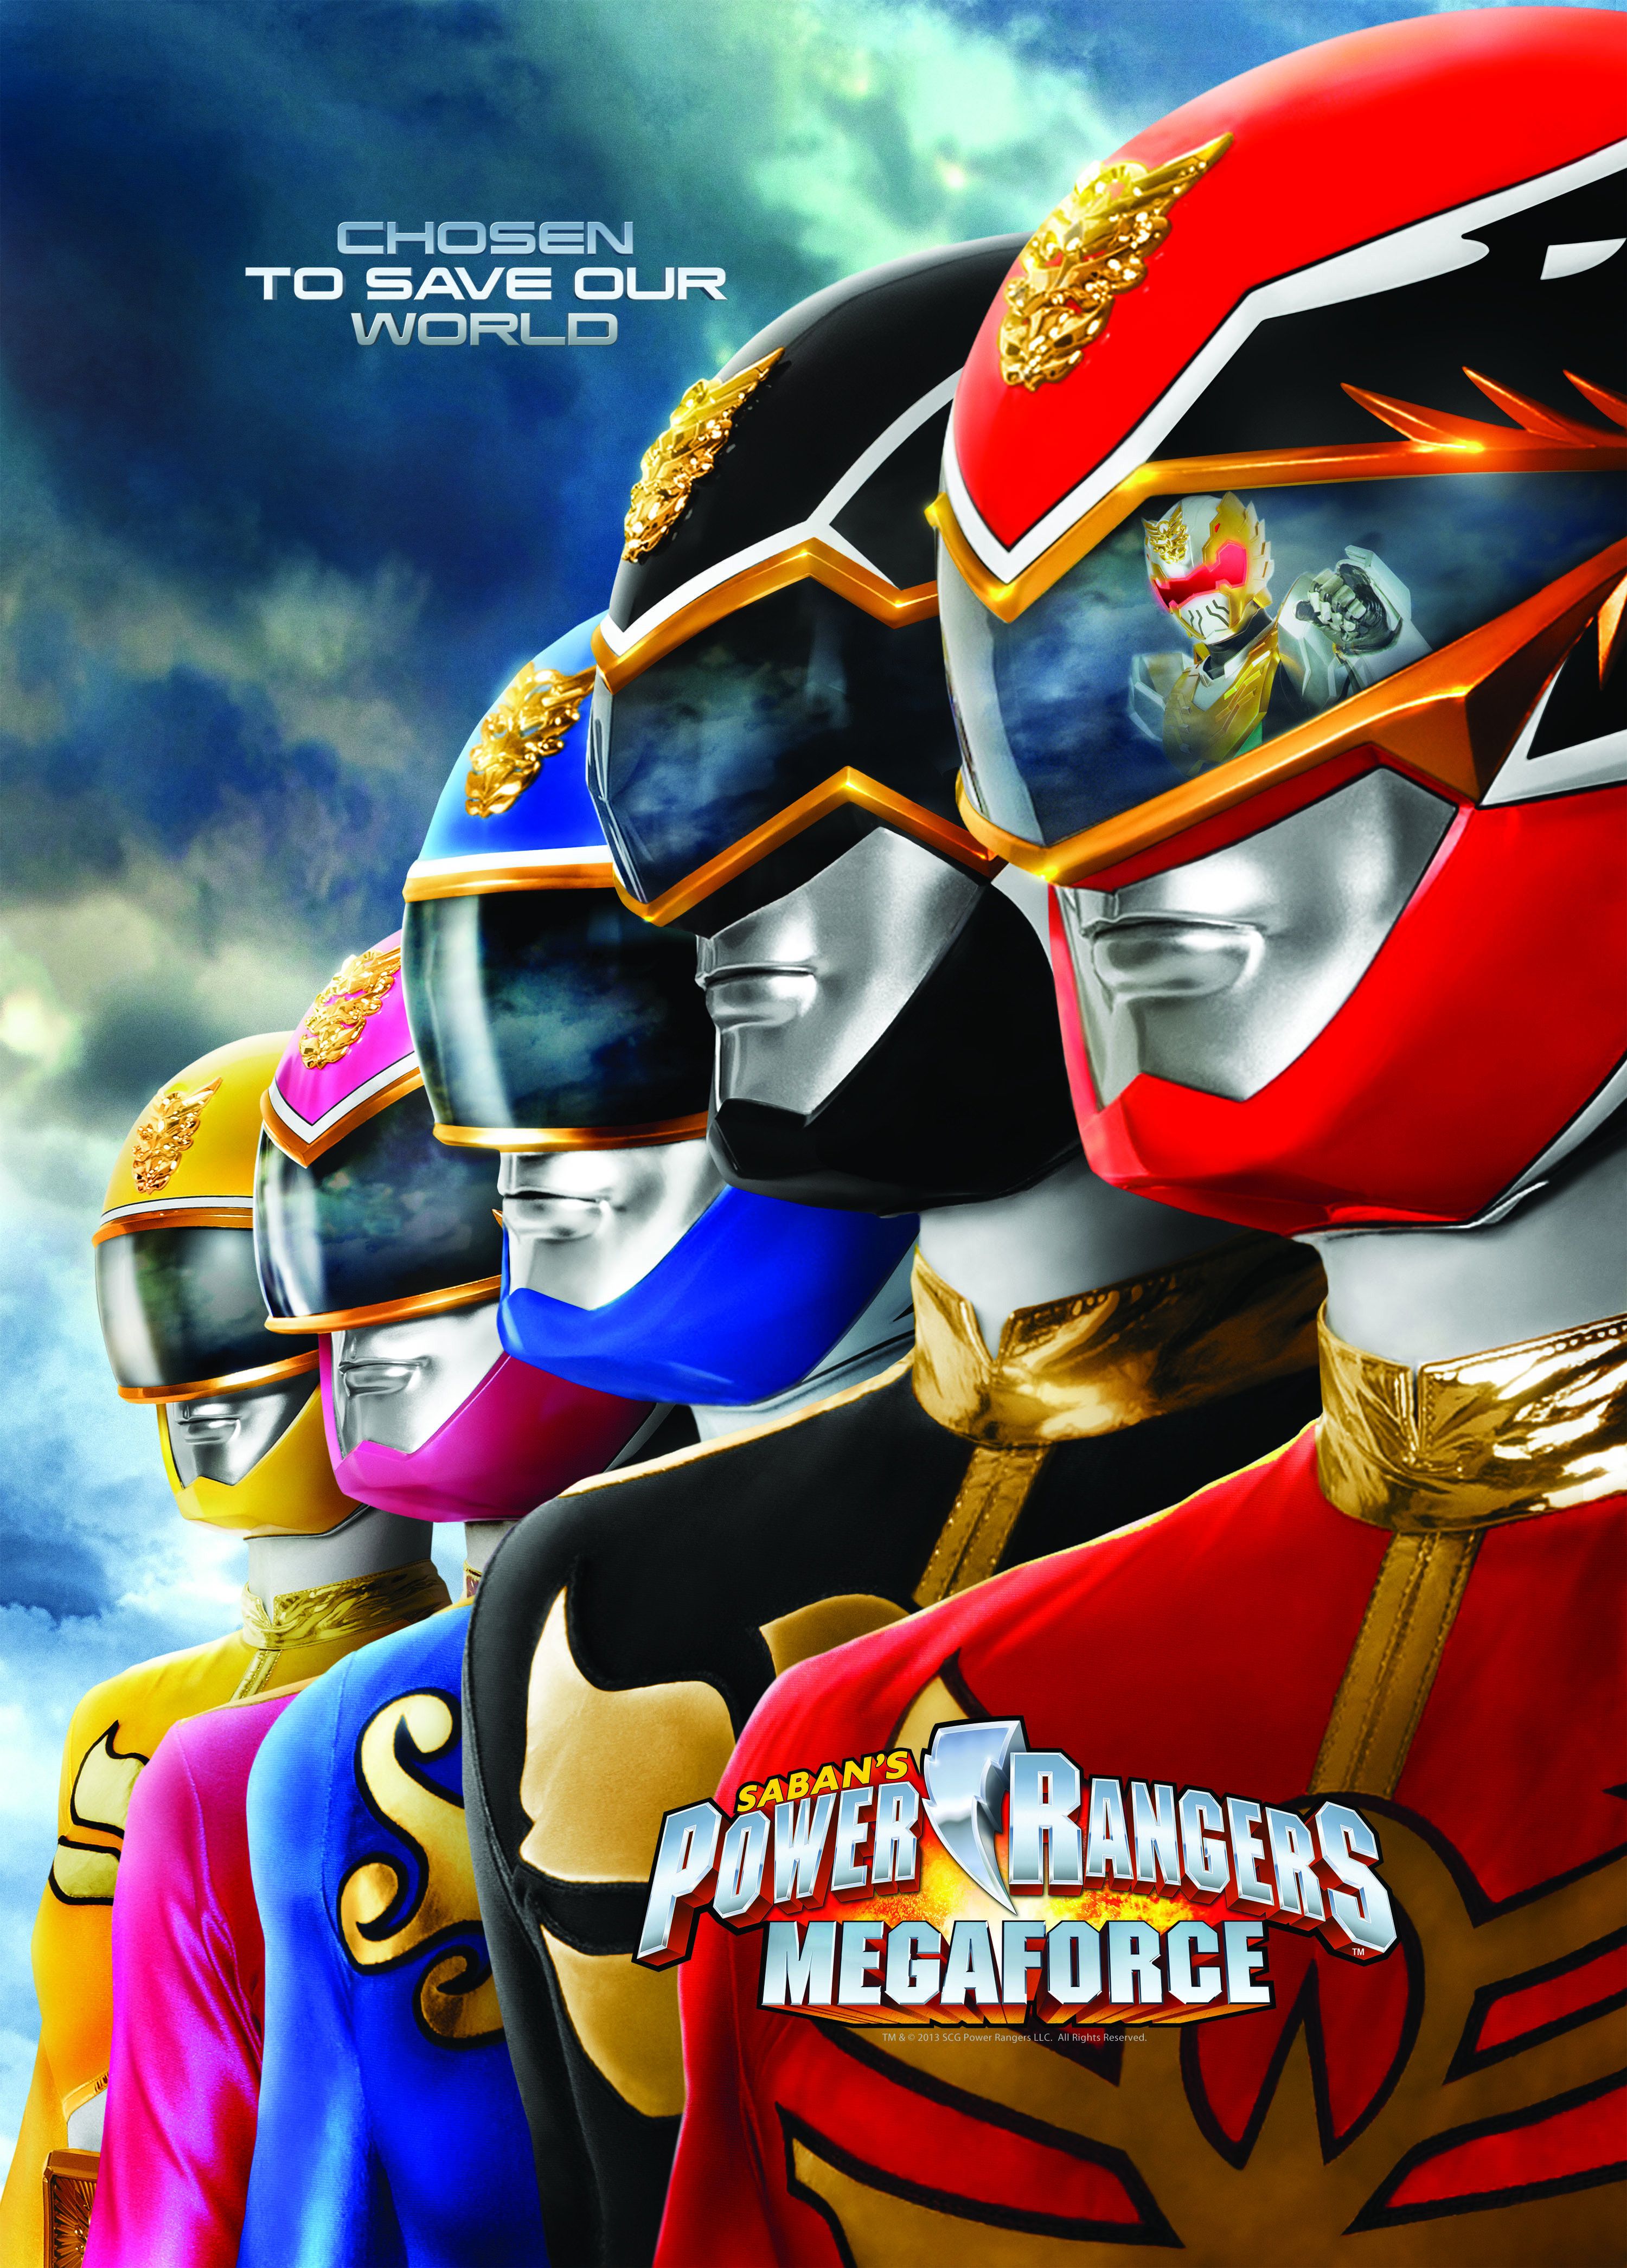 Power Rangers Megaforce (TV Series 2013–2014)